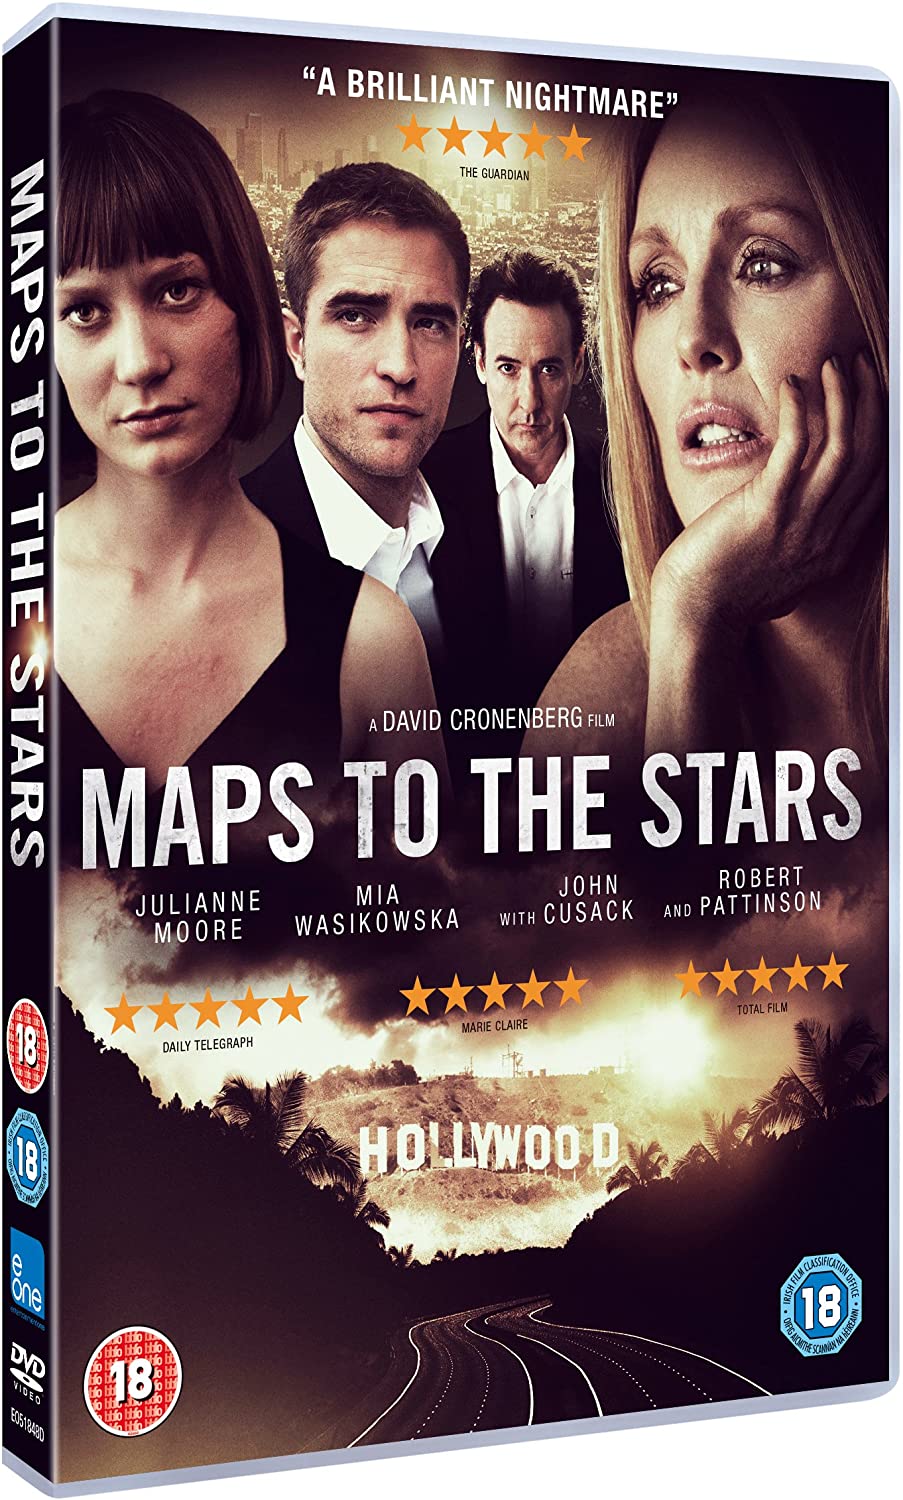 Maps to the Stars - Drama [2014] [DVD]